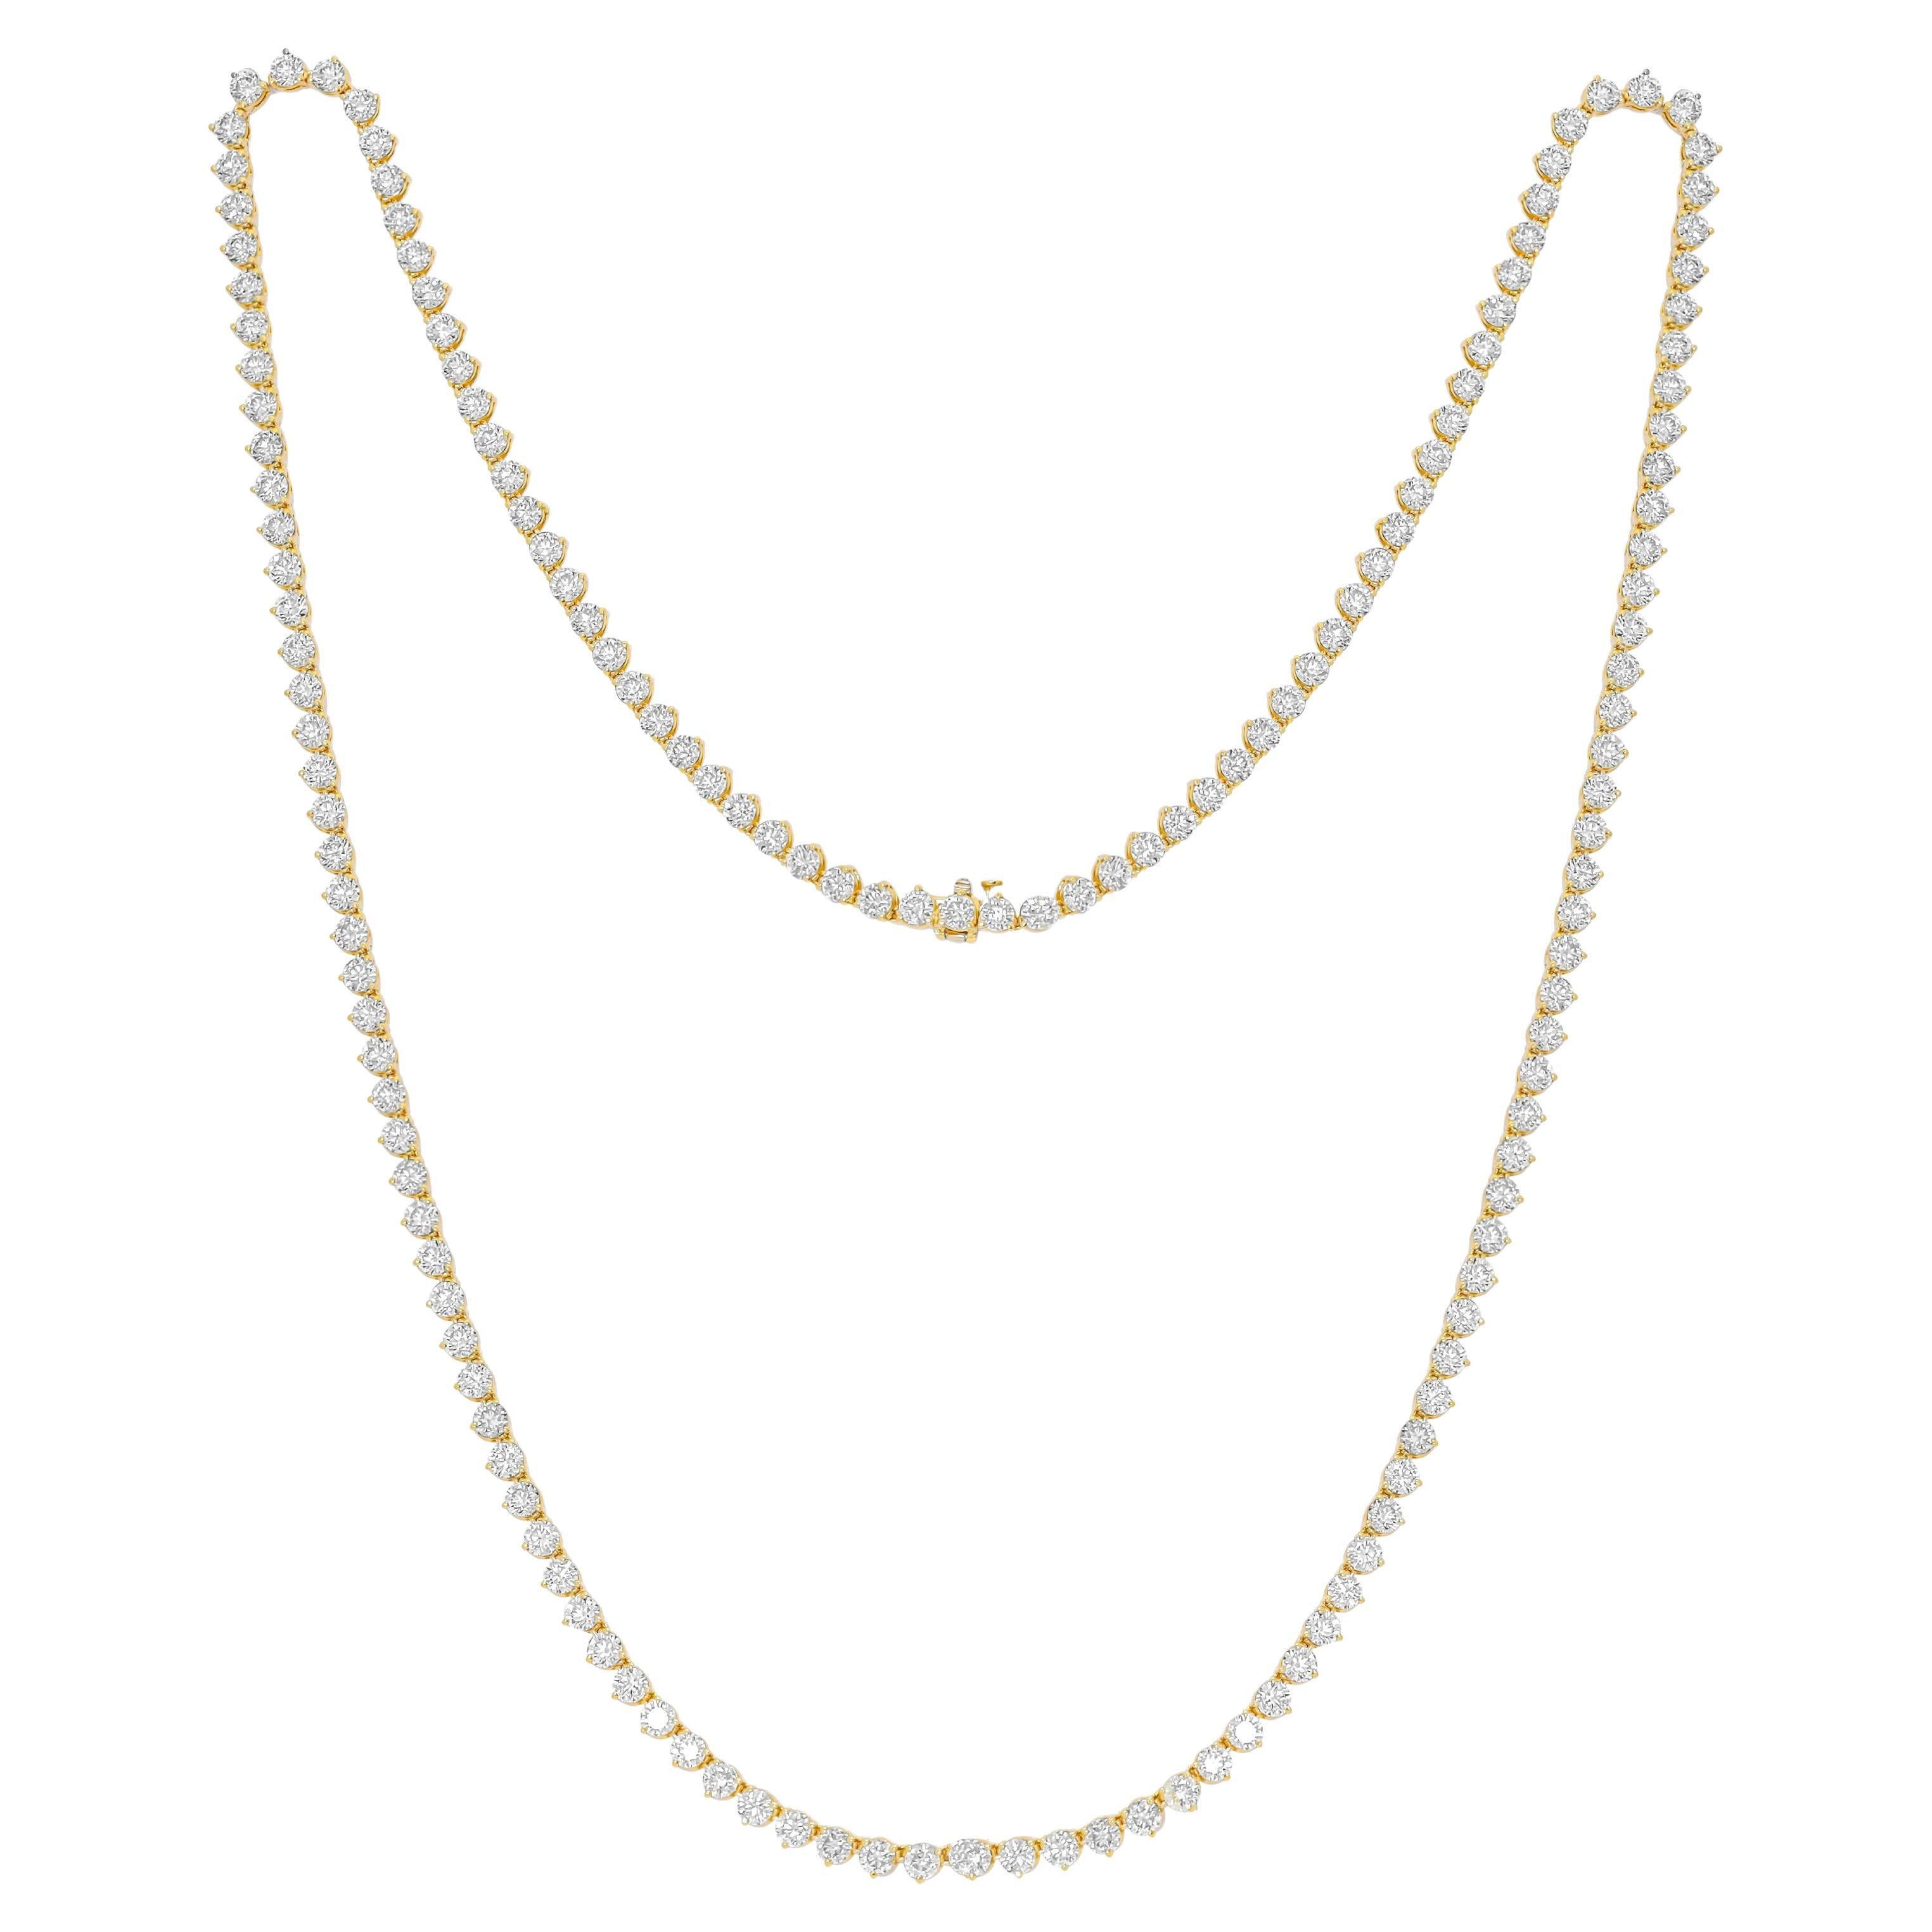 Diana M. 48.65 Ct Long Diamond Tennis Necklace